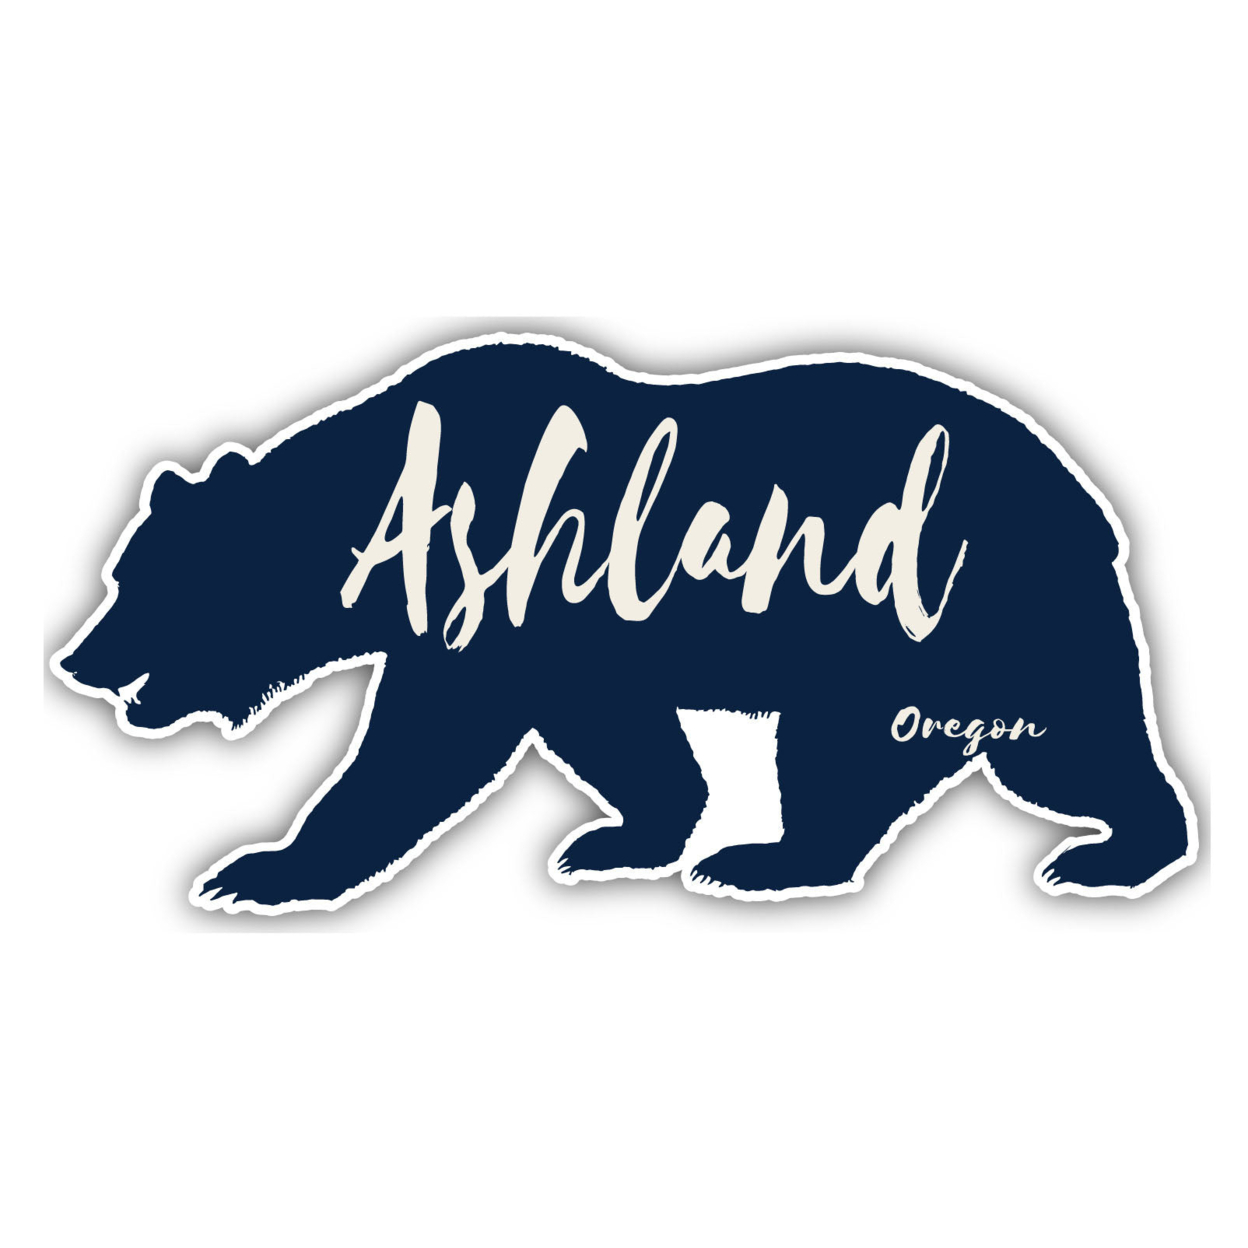 Ashland Oregon Souvenir Decorative Stickers (Choose Theme And Size) - Single Unit, 8-Inch, Tent